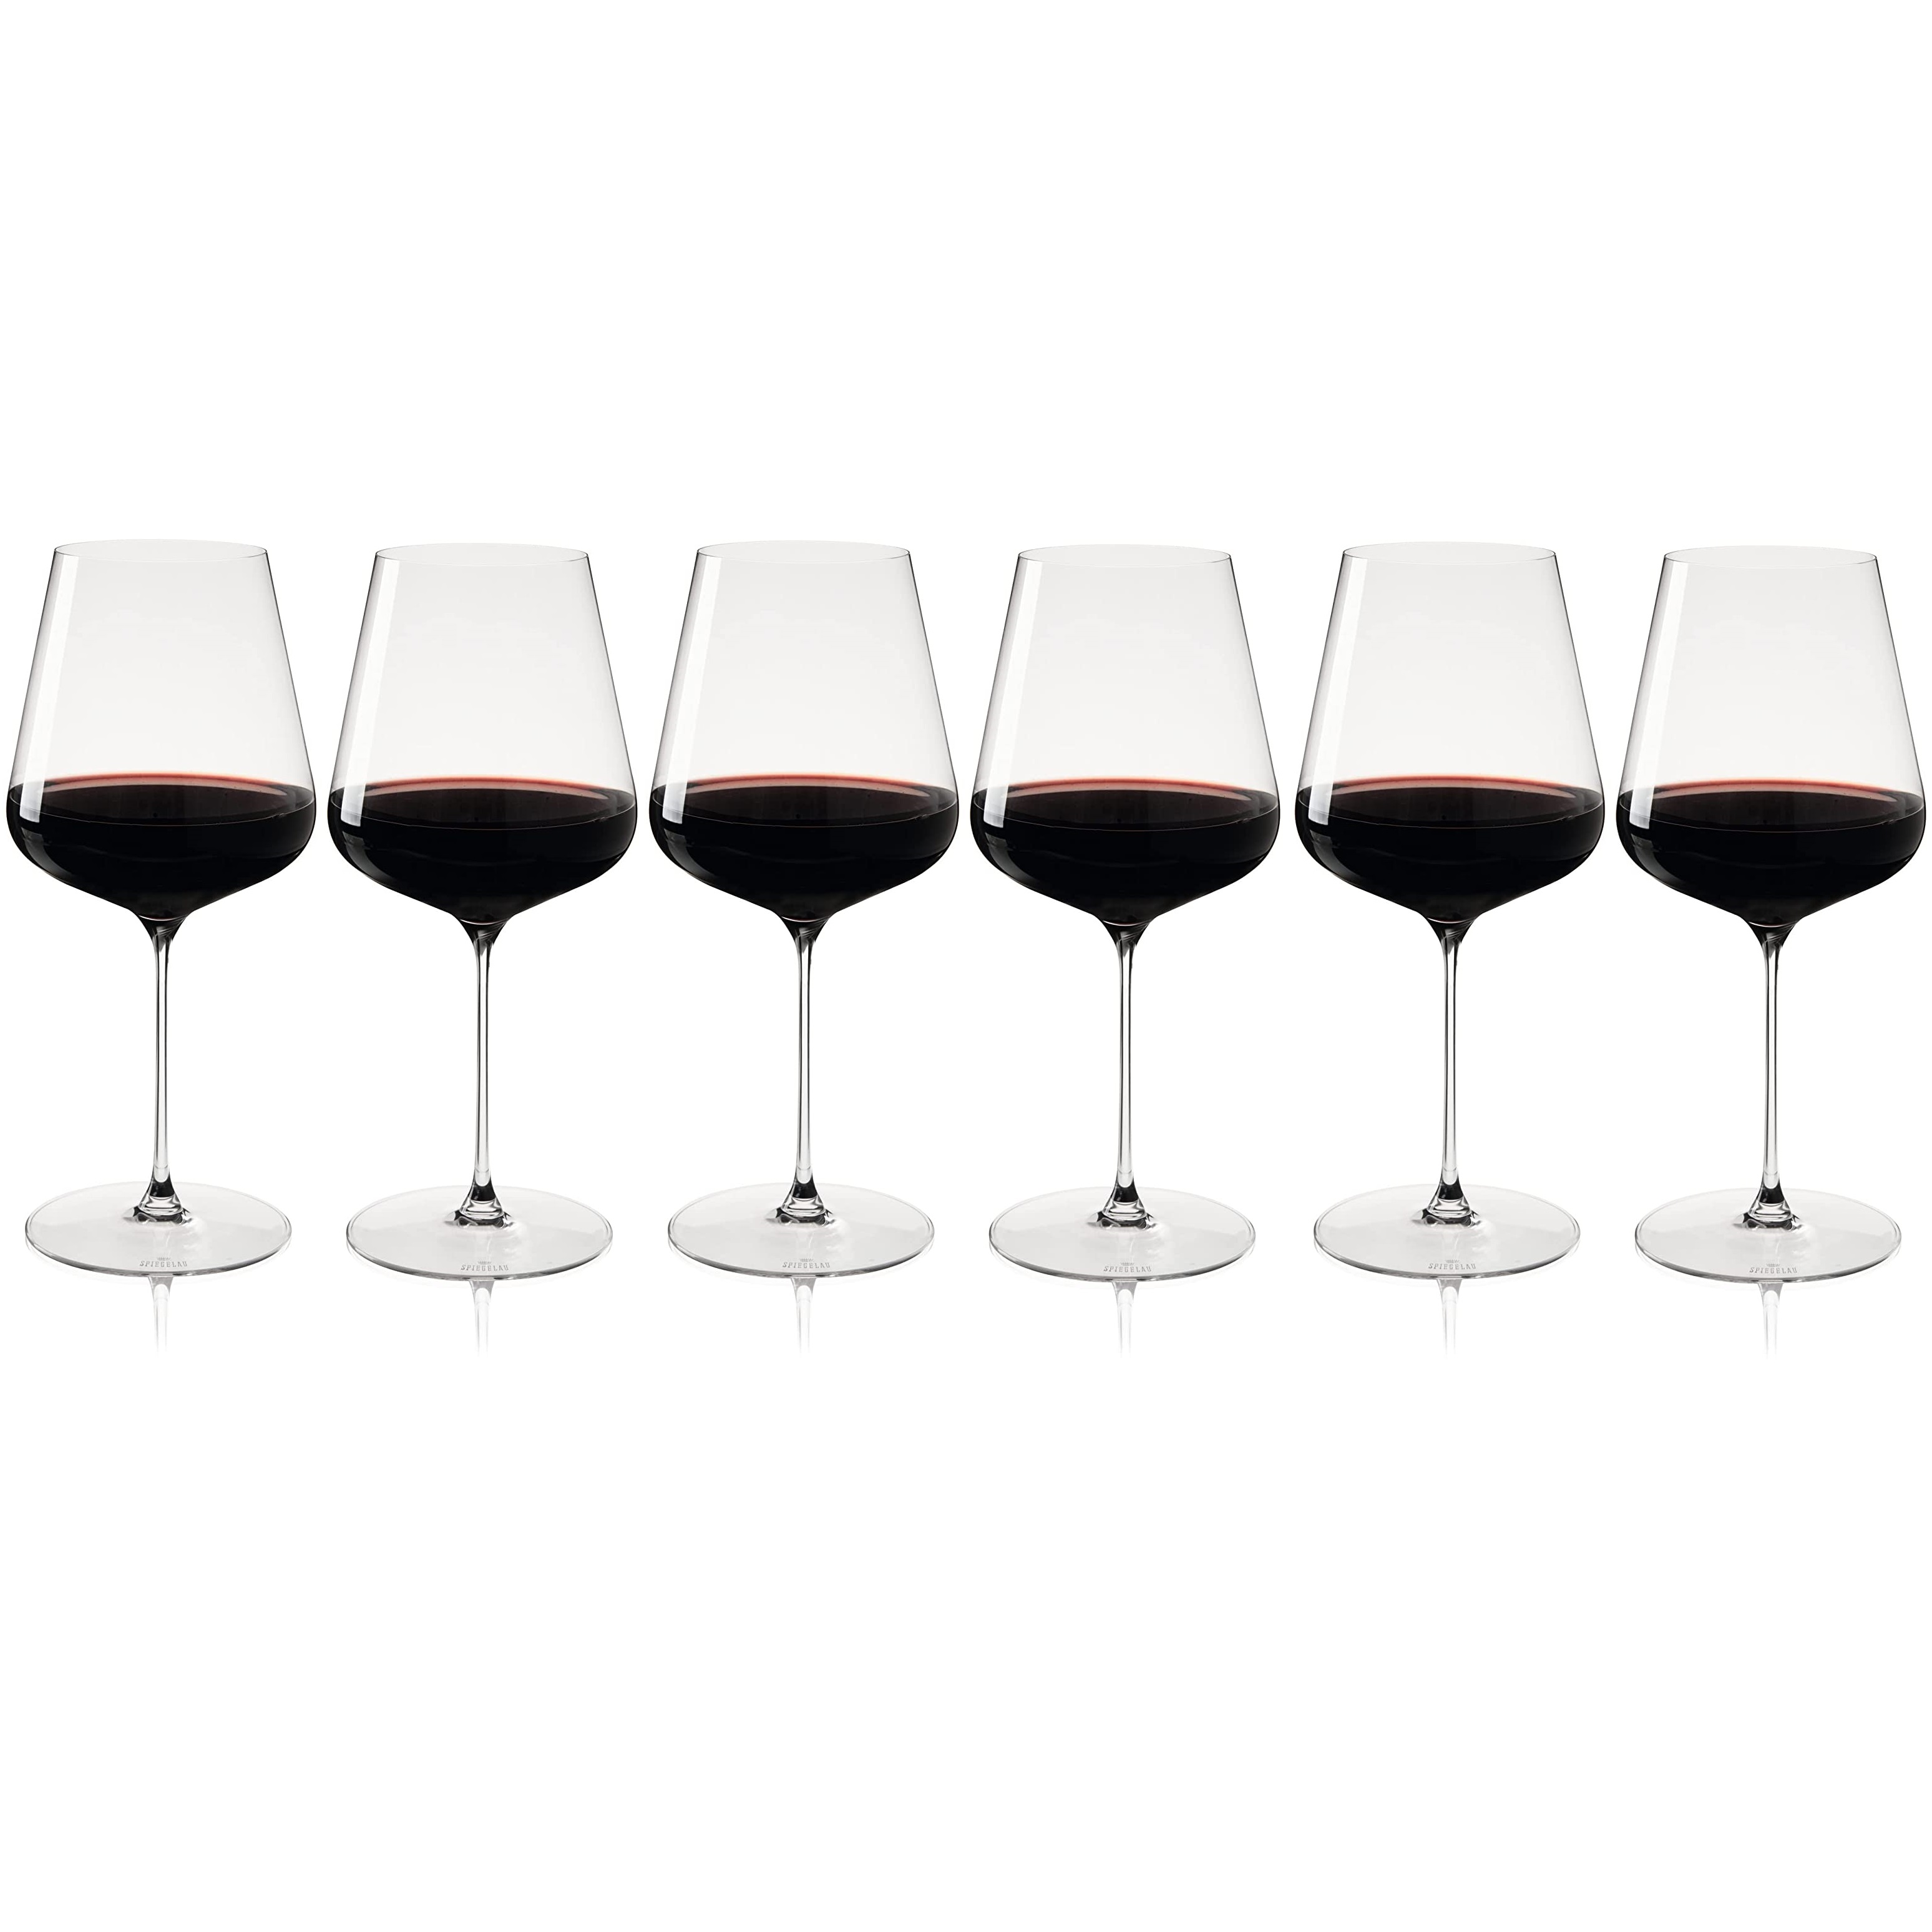 6 бокалов для красного вина Spiegelau Definition Bordeauх 750 мл (арт. 1350135)